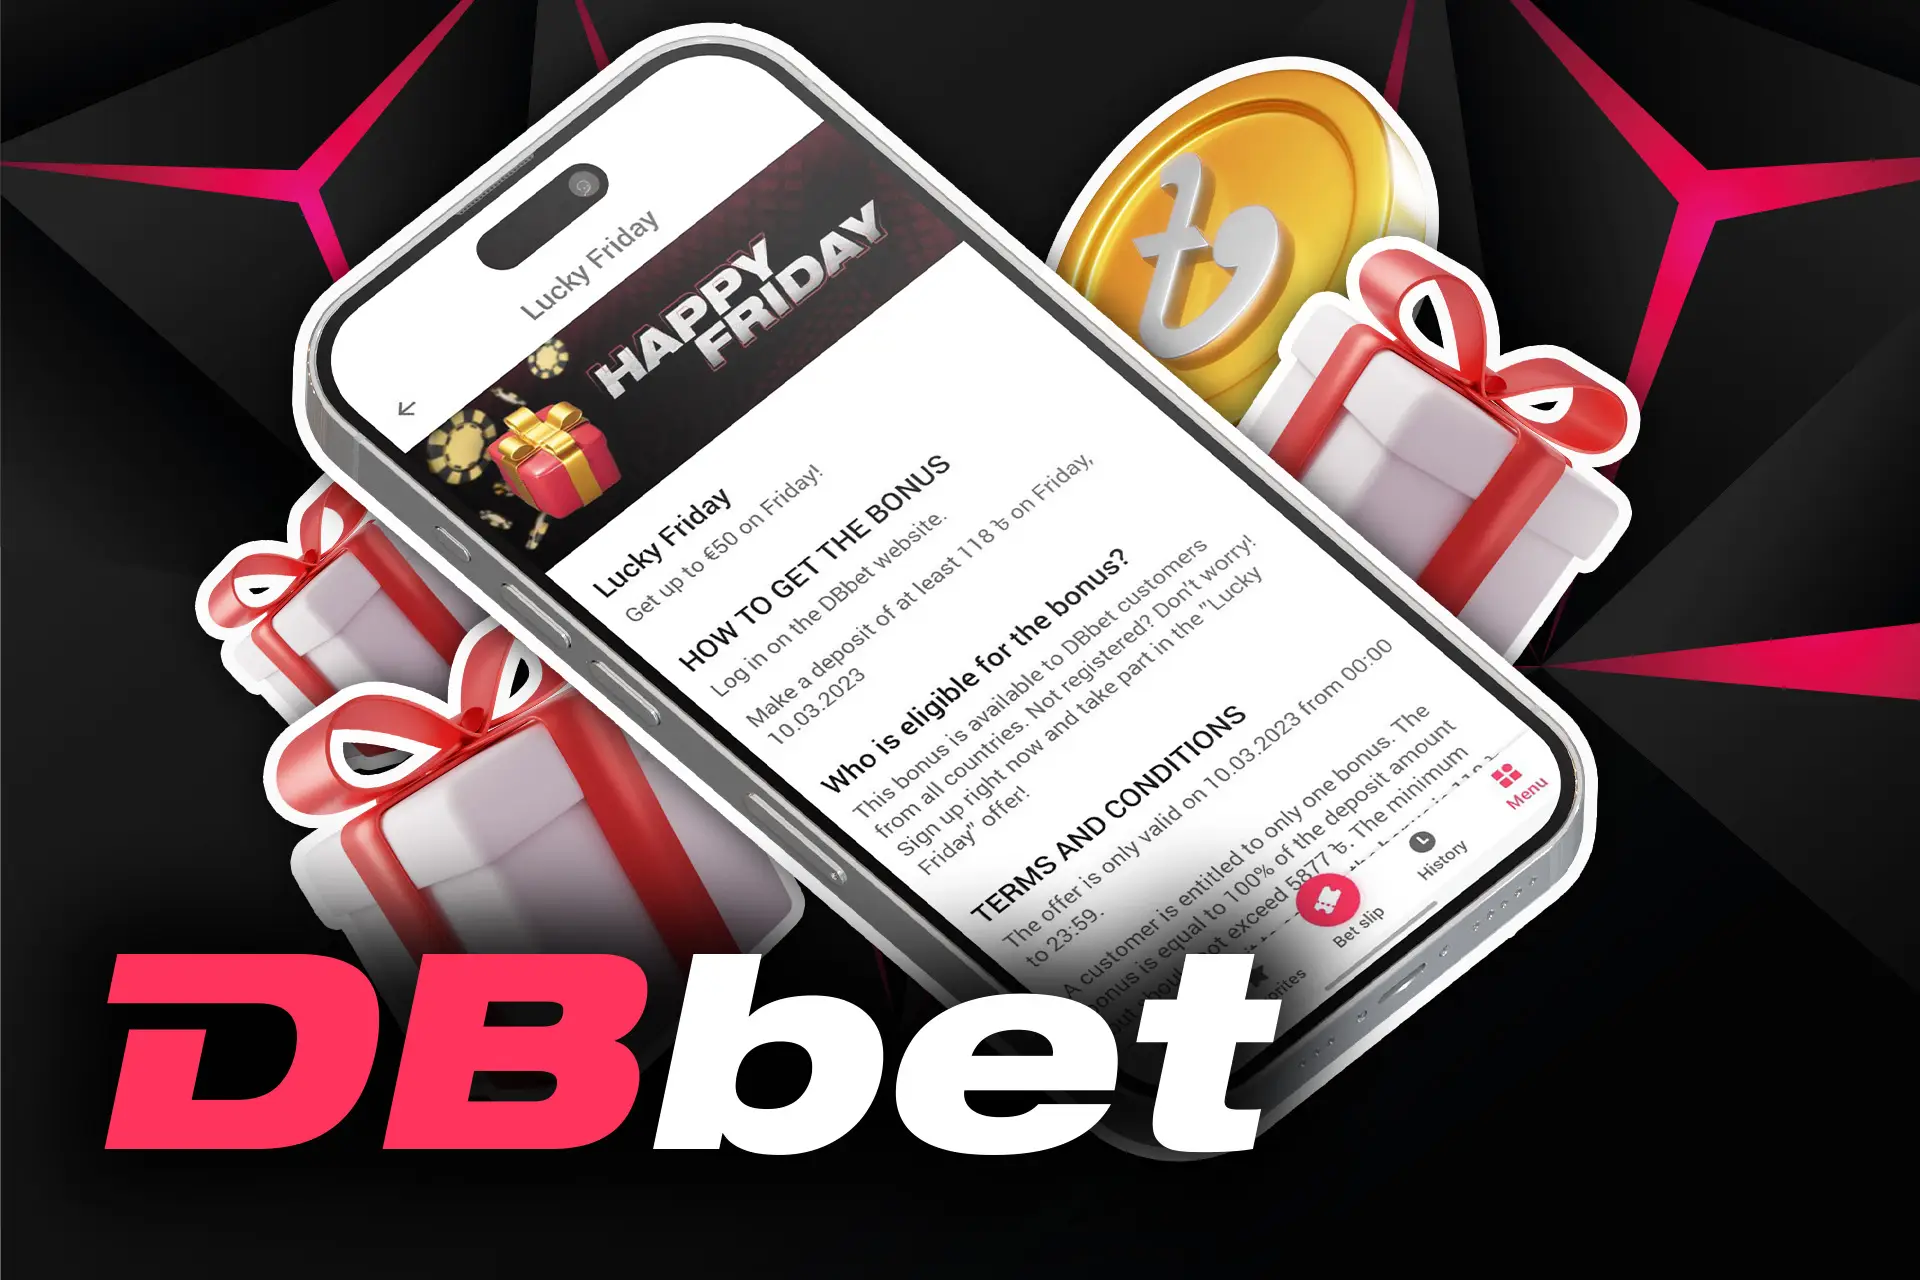 Get a special Friday bonus in the DBbet app.